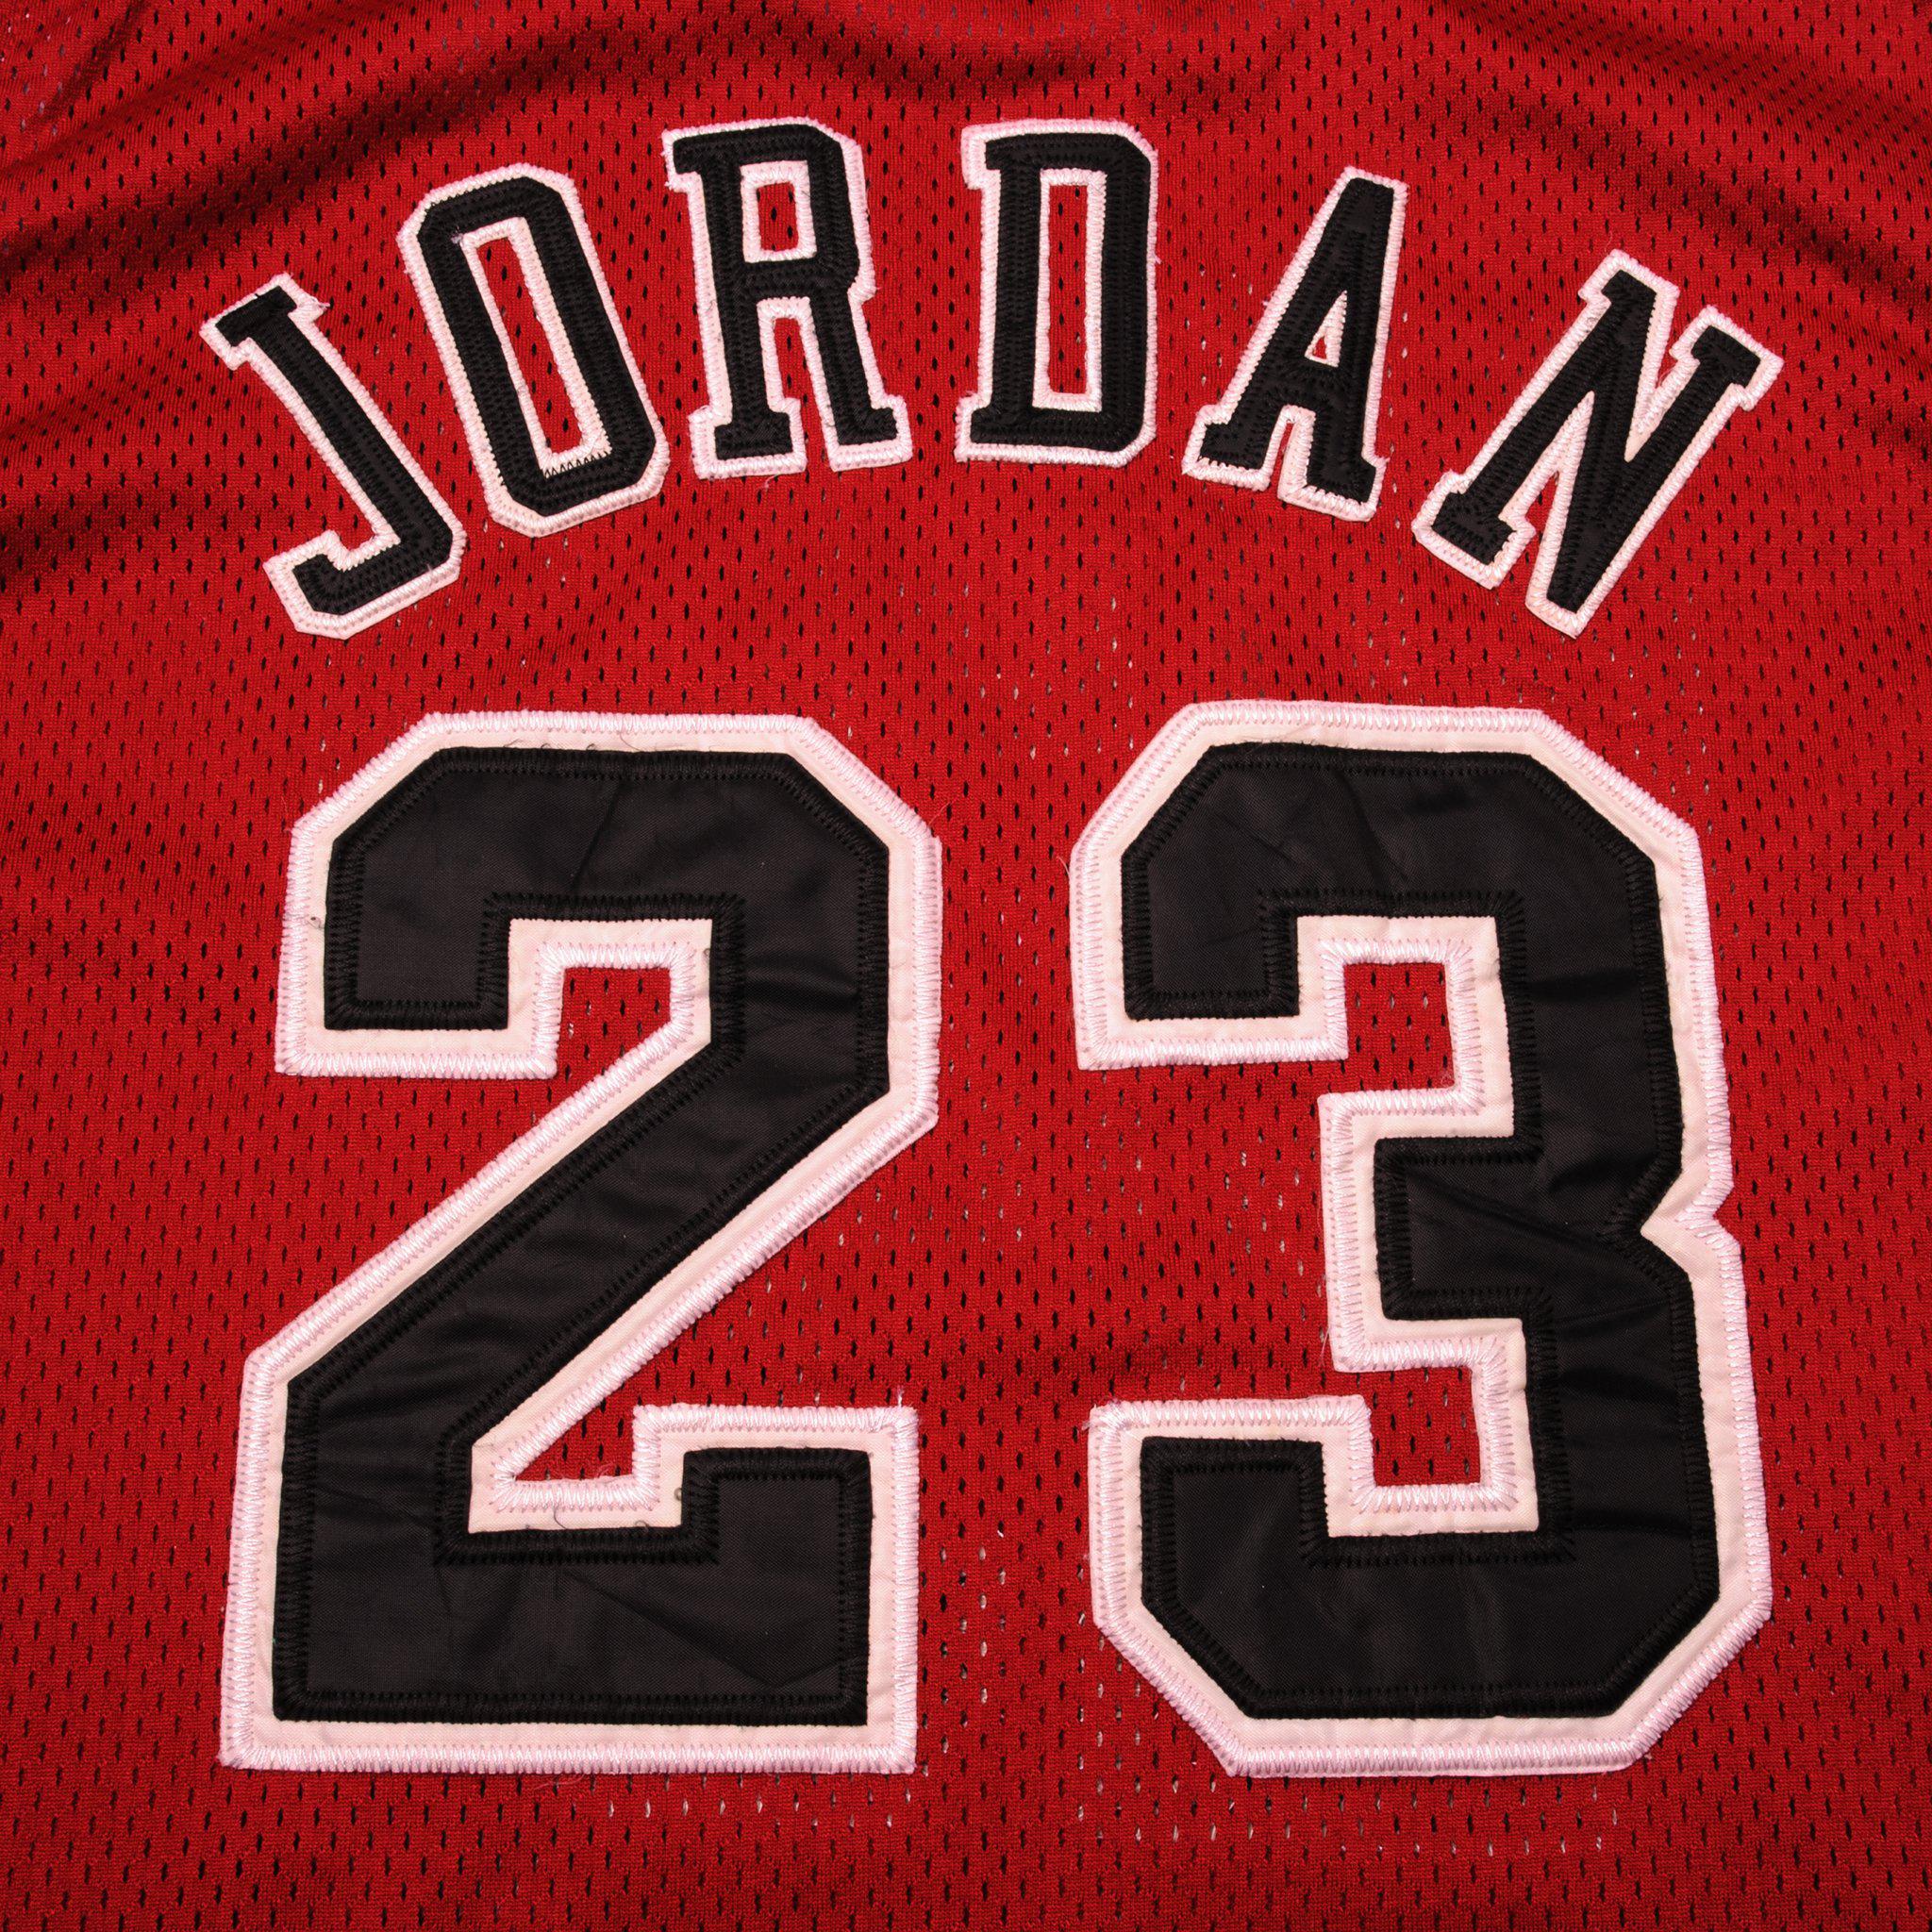 Nike Chicago Bulls Michael Jordan #23 Career Achievements Jersey